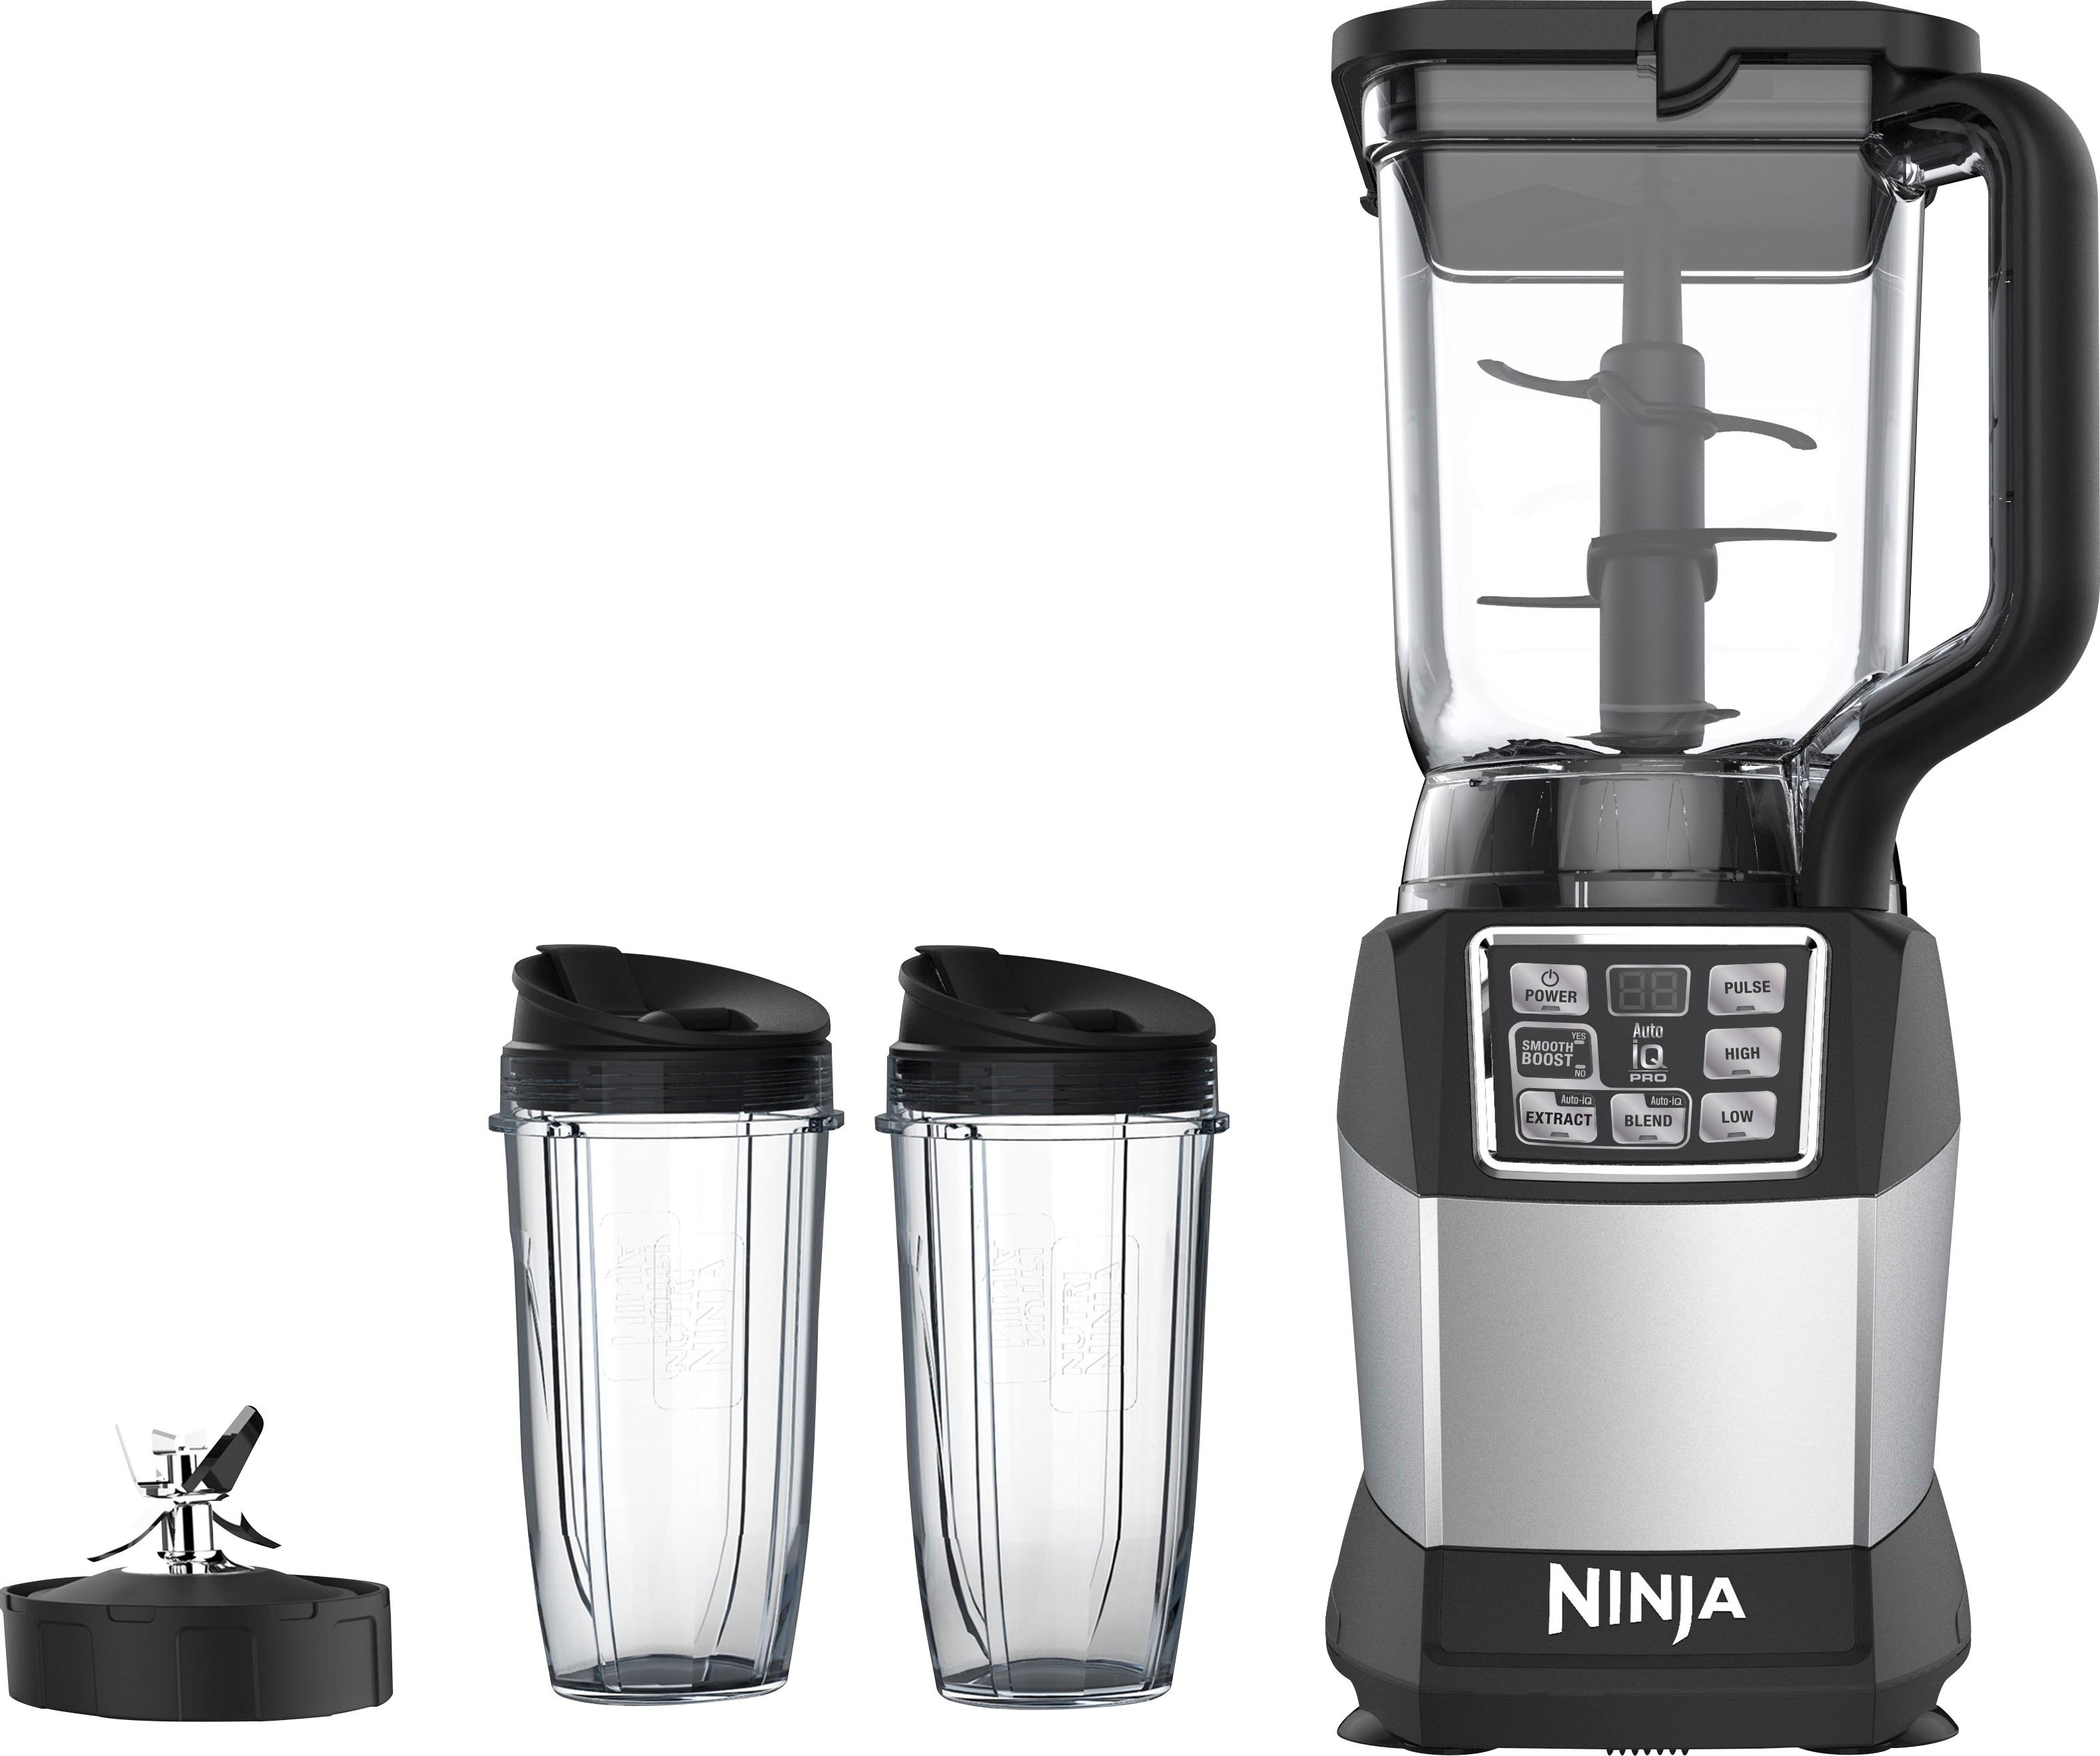 Nutri Ninja Silver Auto-iQ Blender